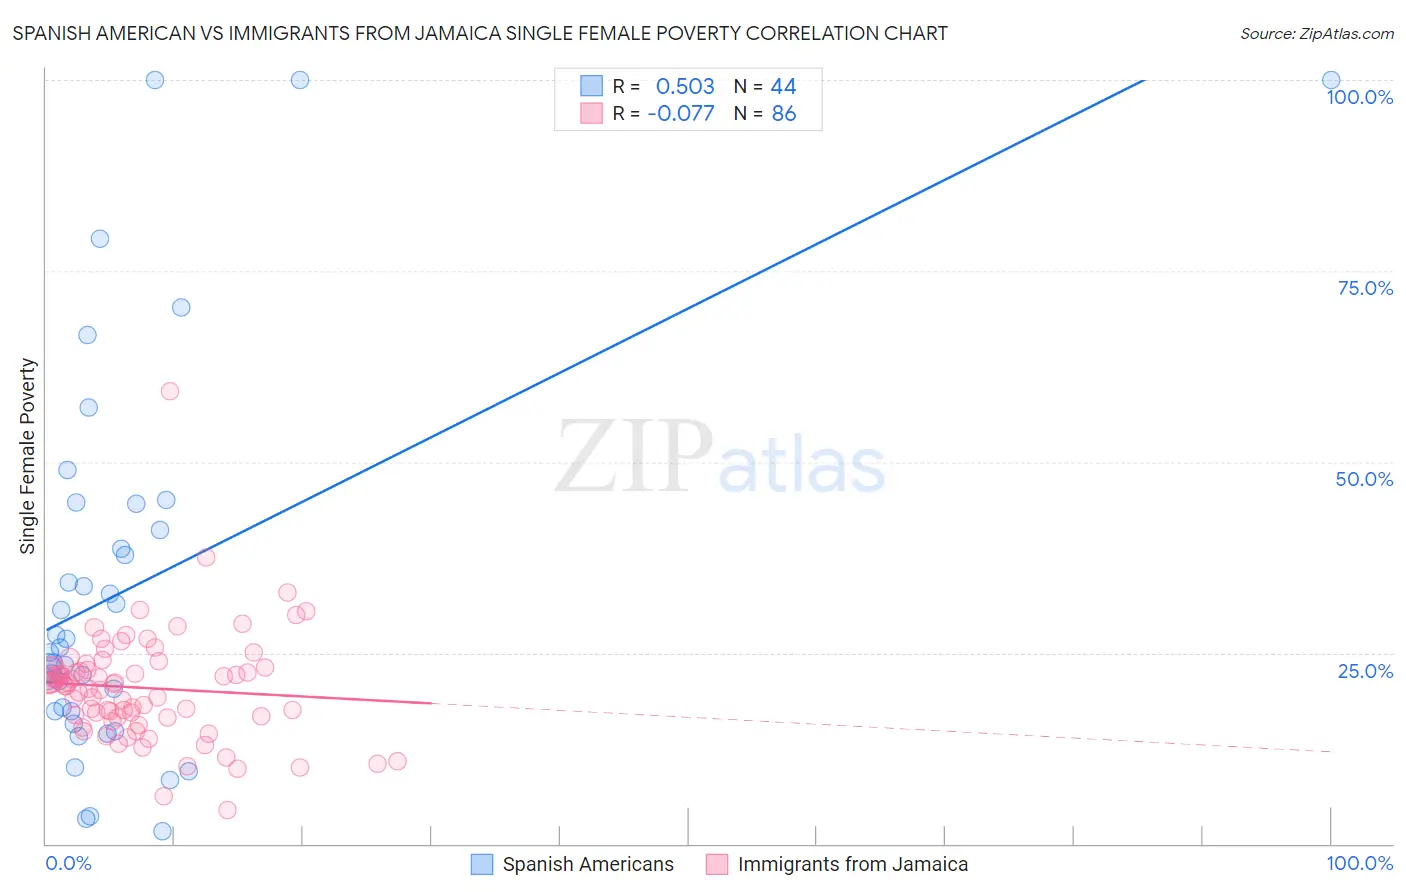 Spanish American vs Immigrants from Jamaica Single Female Poverty